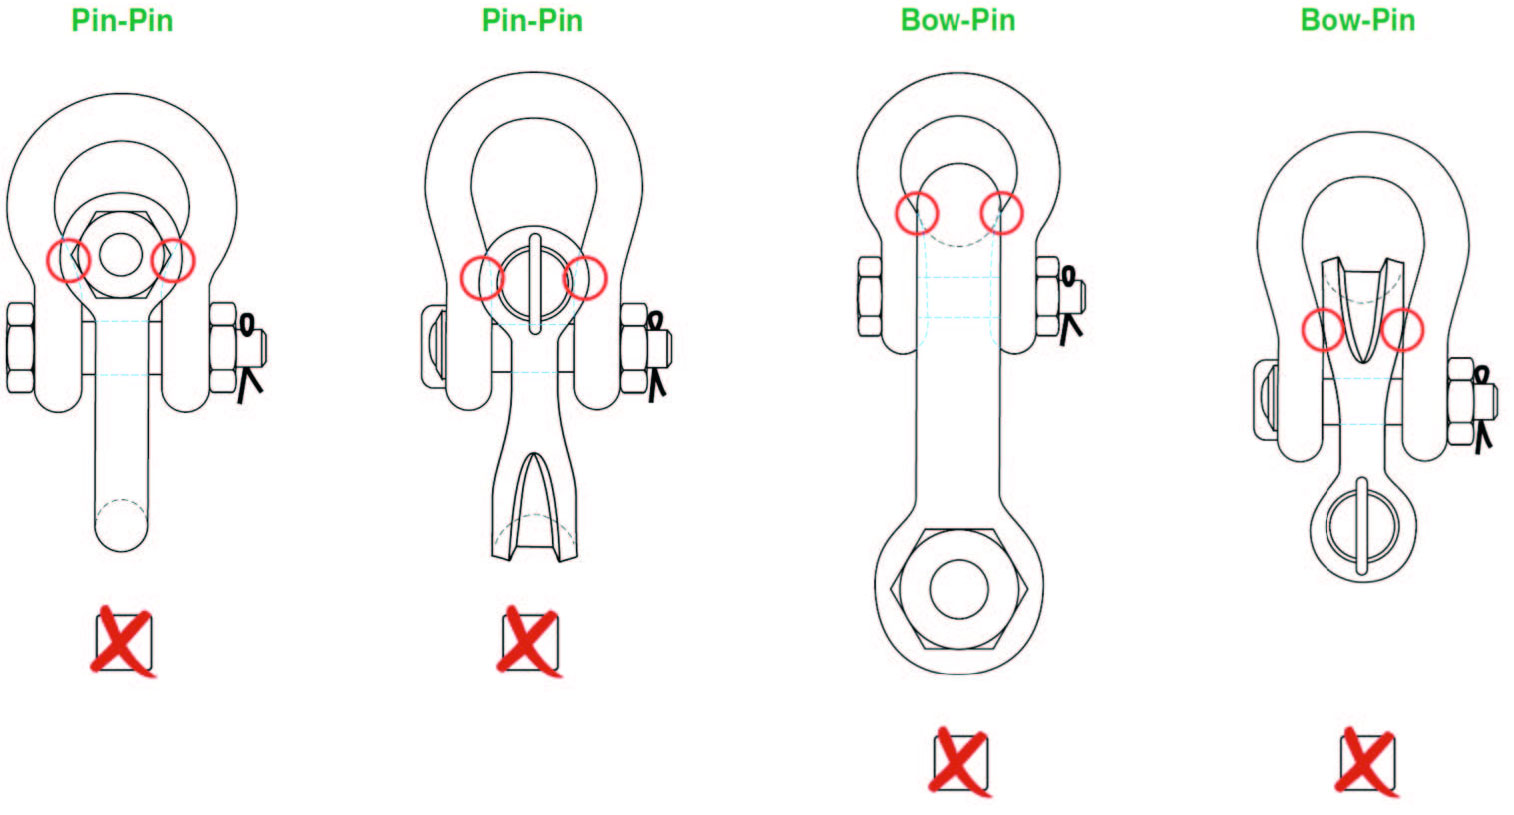 Bow-Pin Configuration diagram